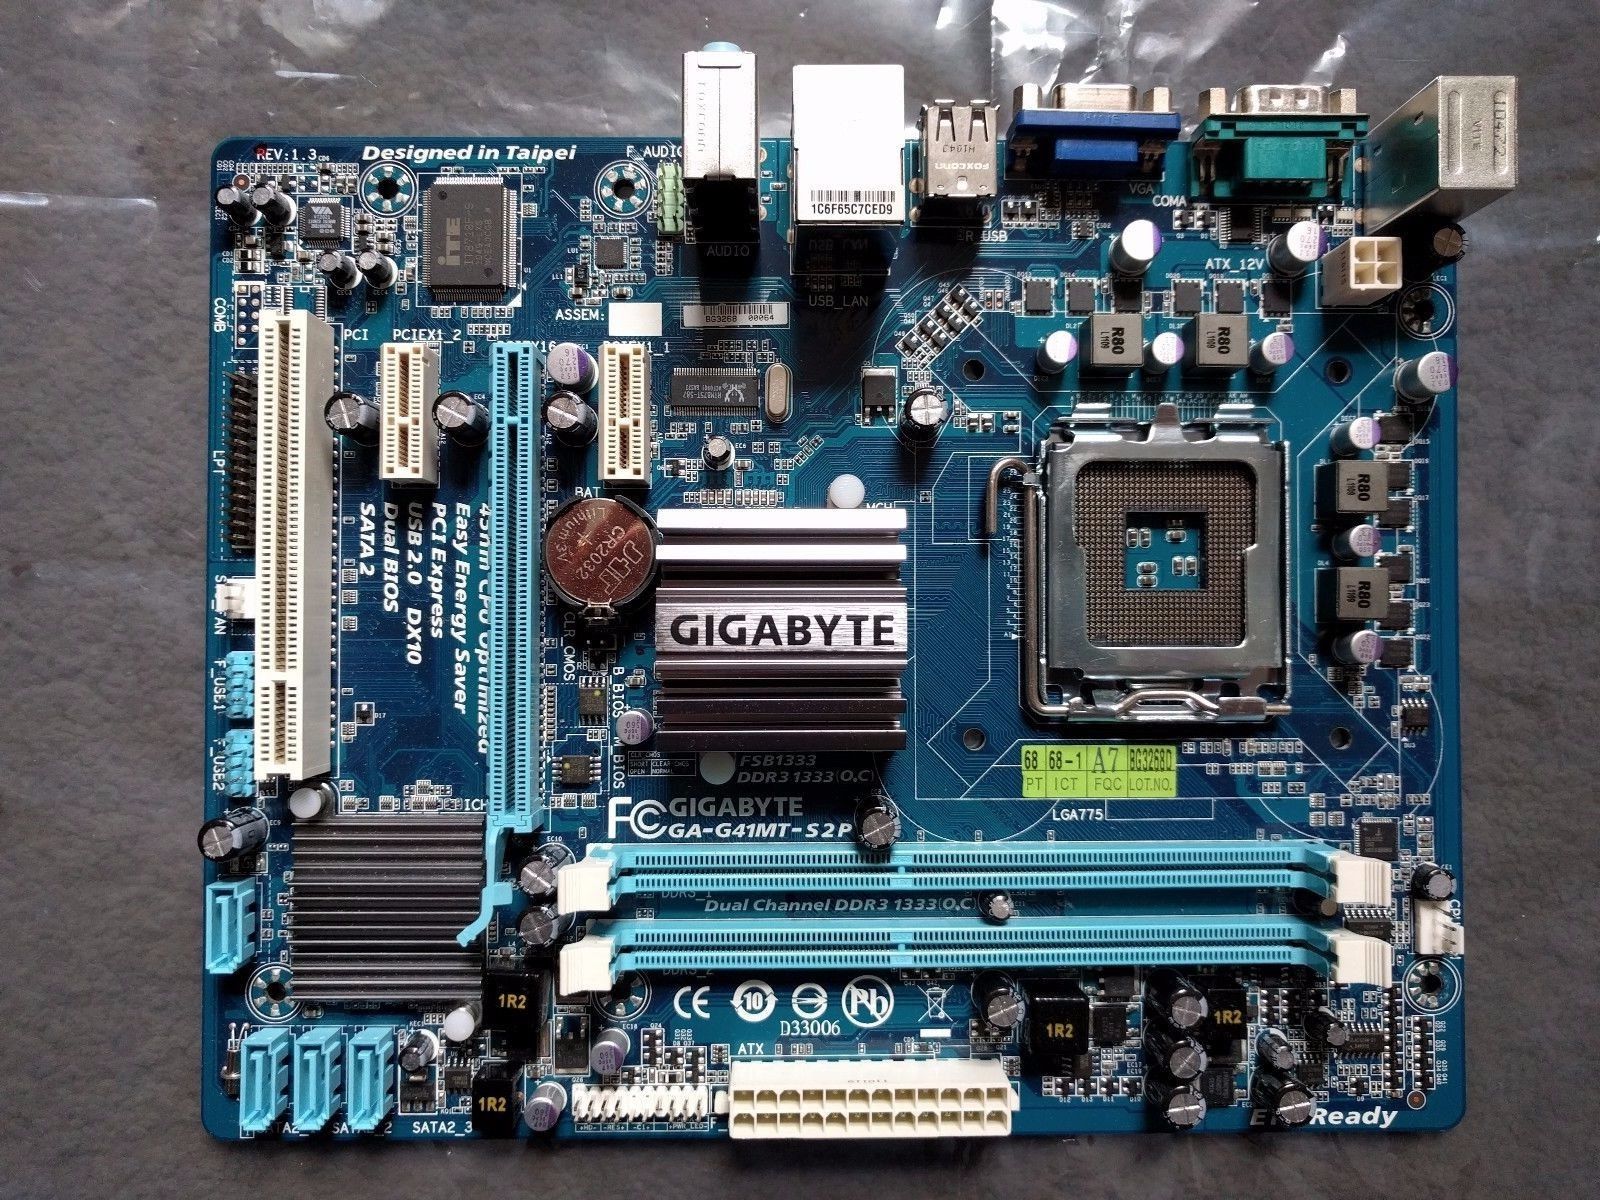 GIGABYTE GA-G41MT-S2P LGA 775 Intel microATX Motherboard tested - Click Image to Close